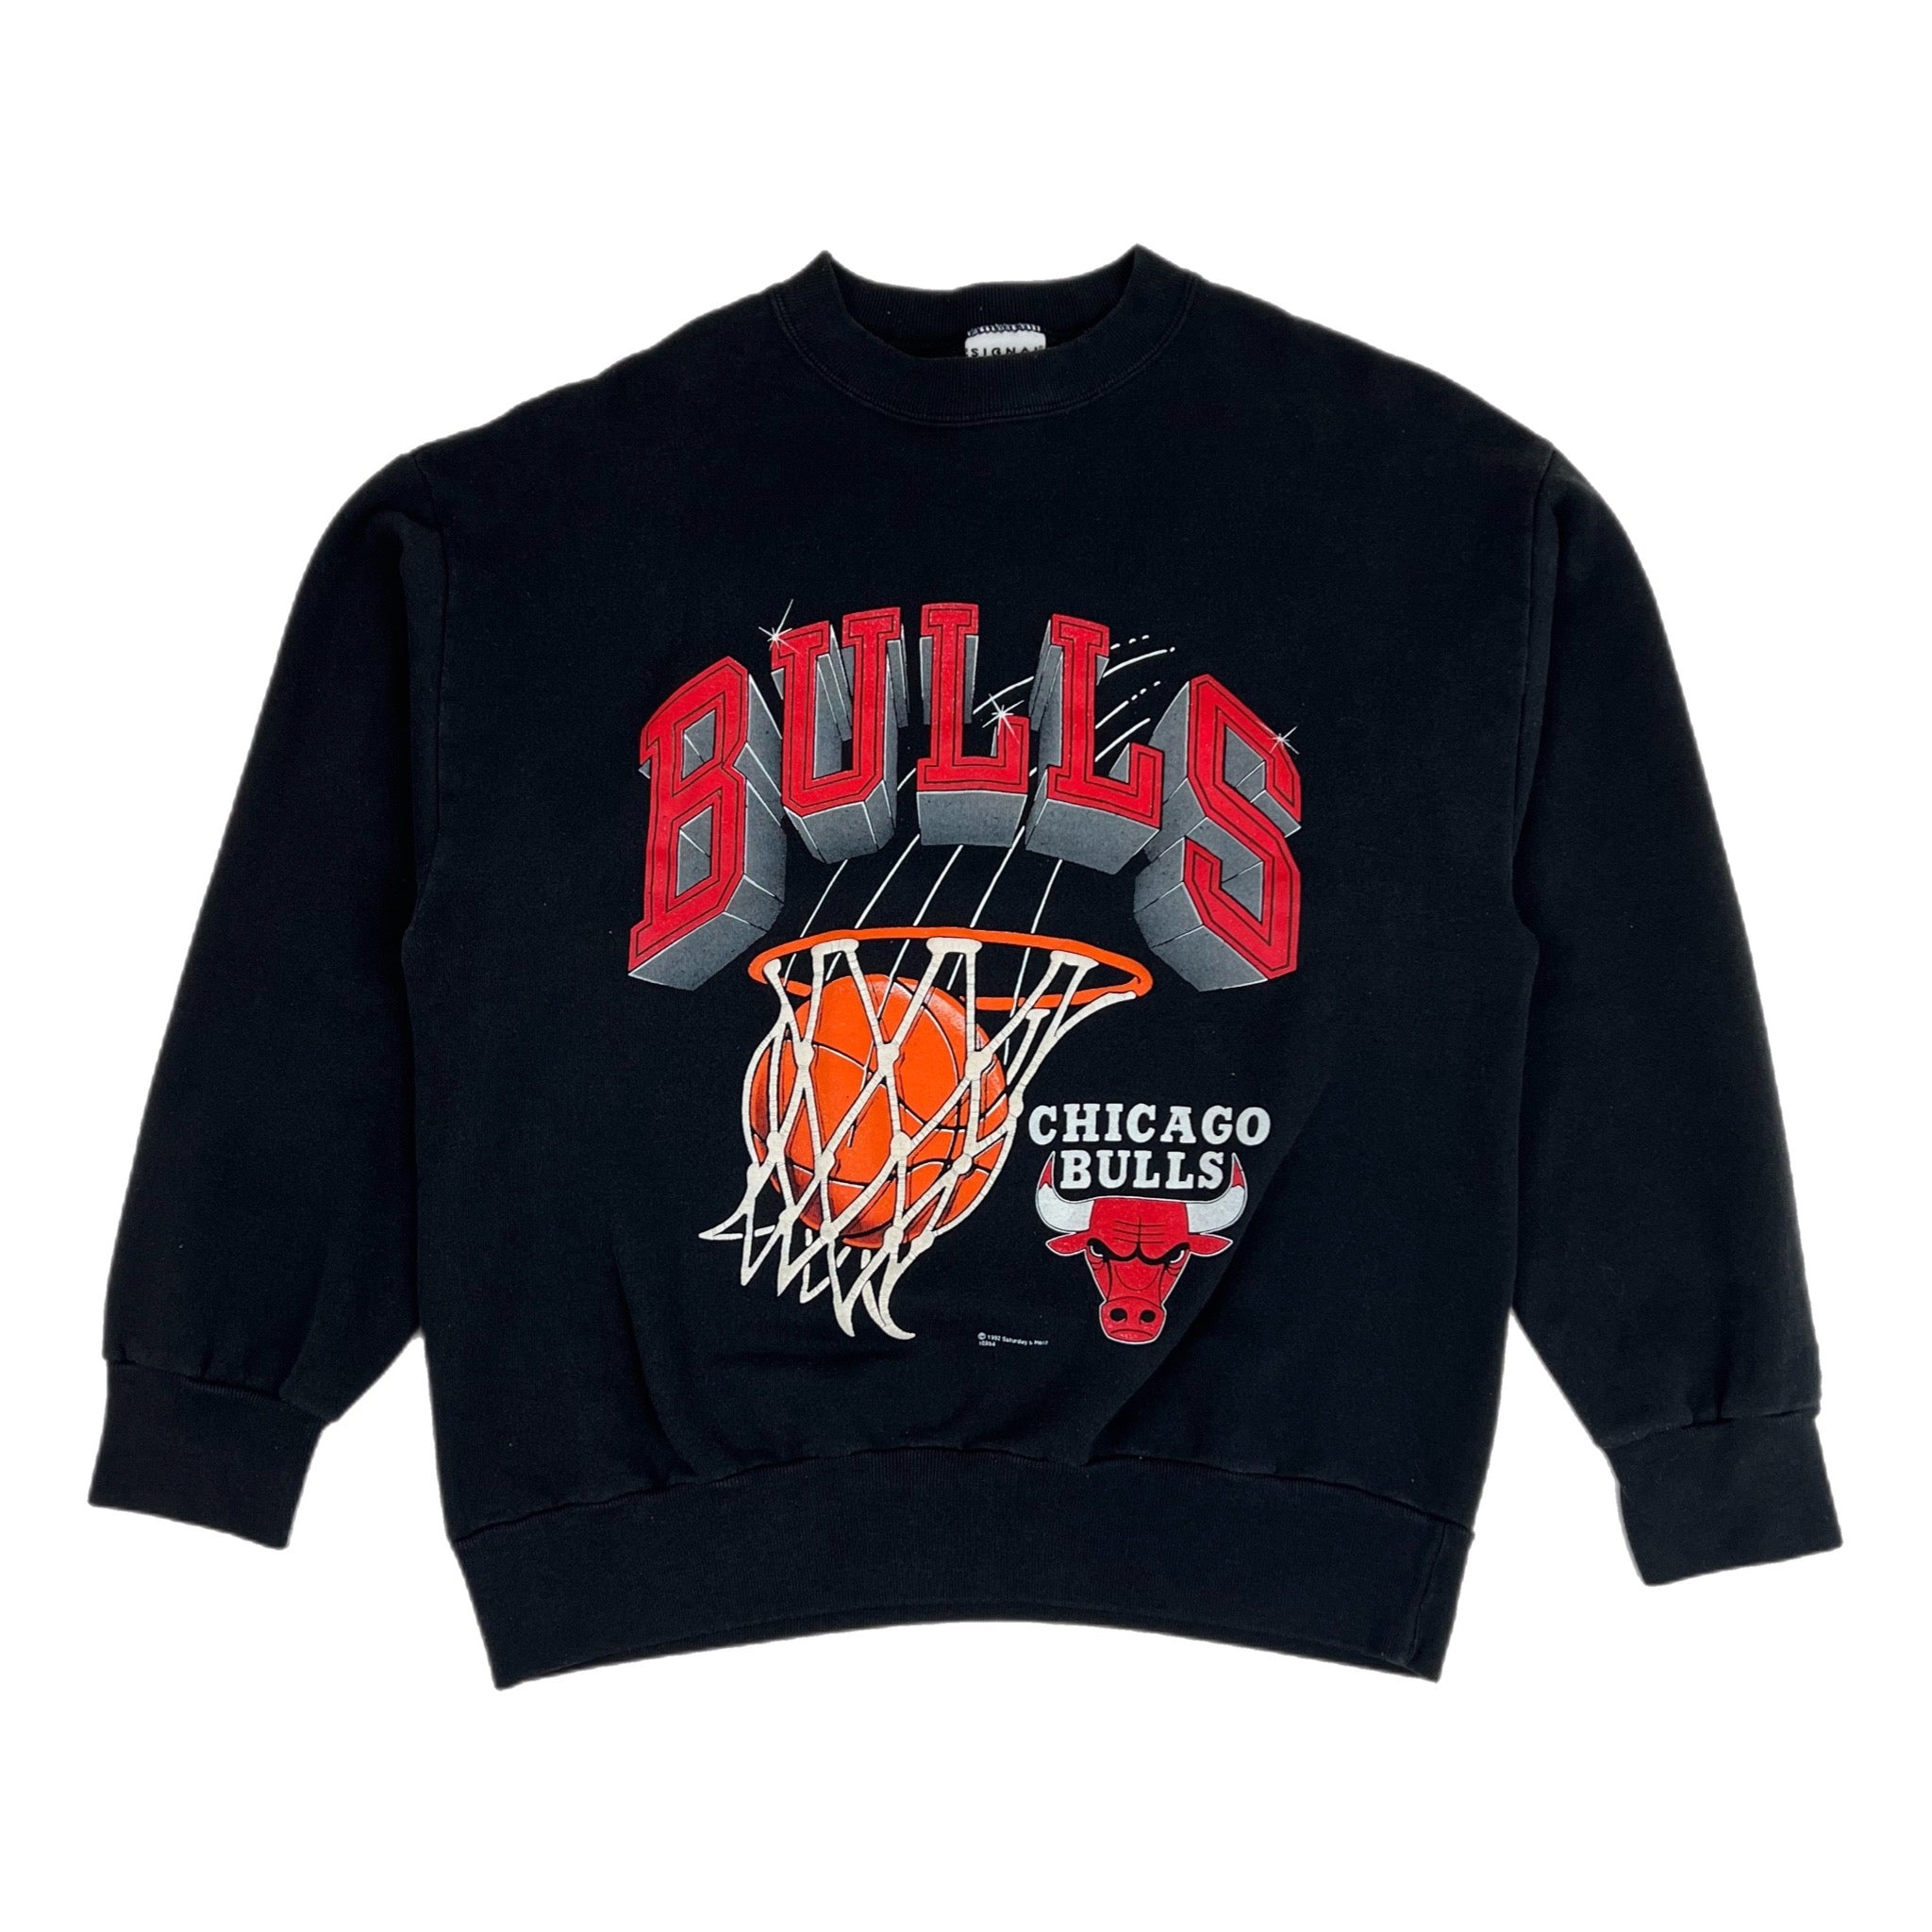 1992 Chicago Bulls Crewneck - Black Vintage Sweatshirt